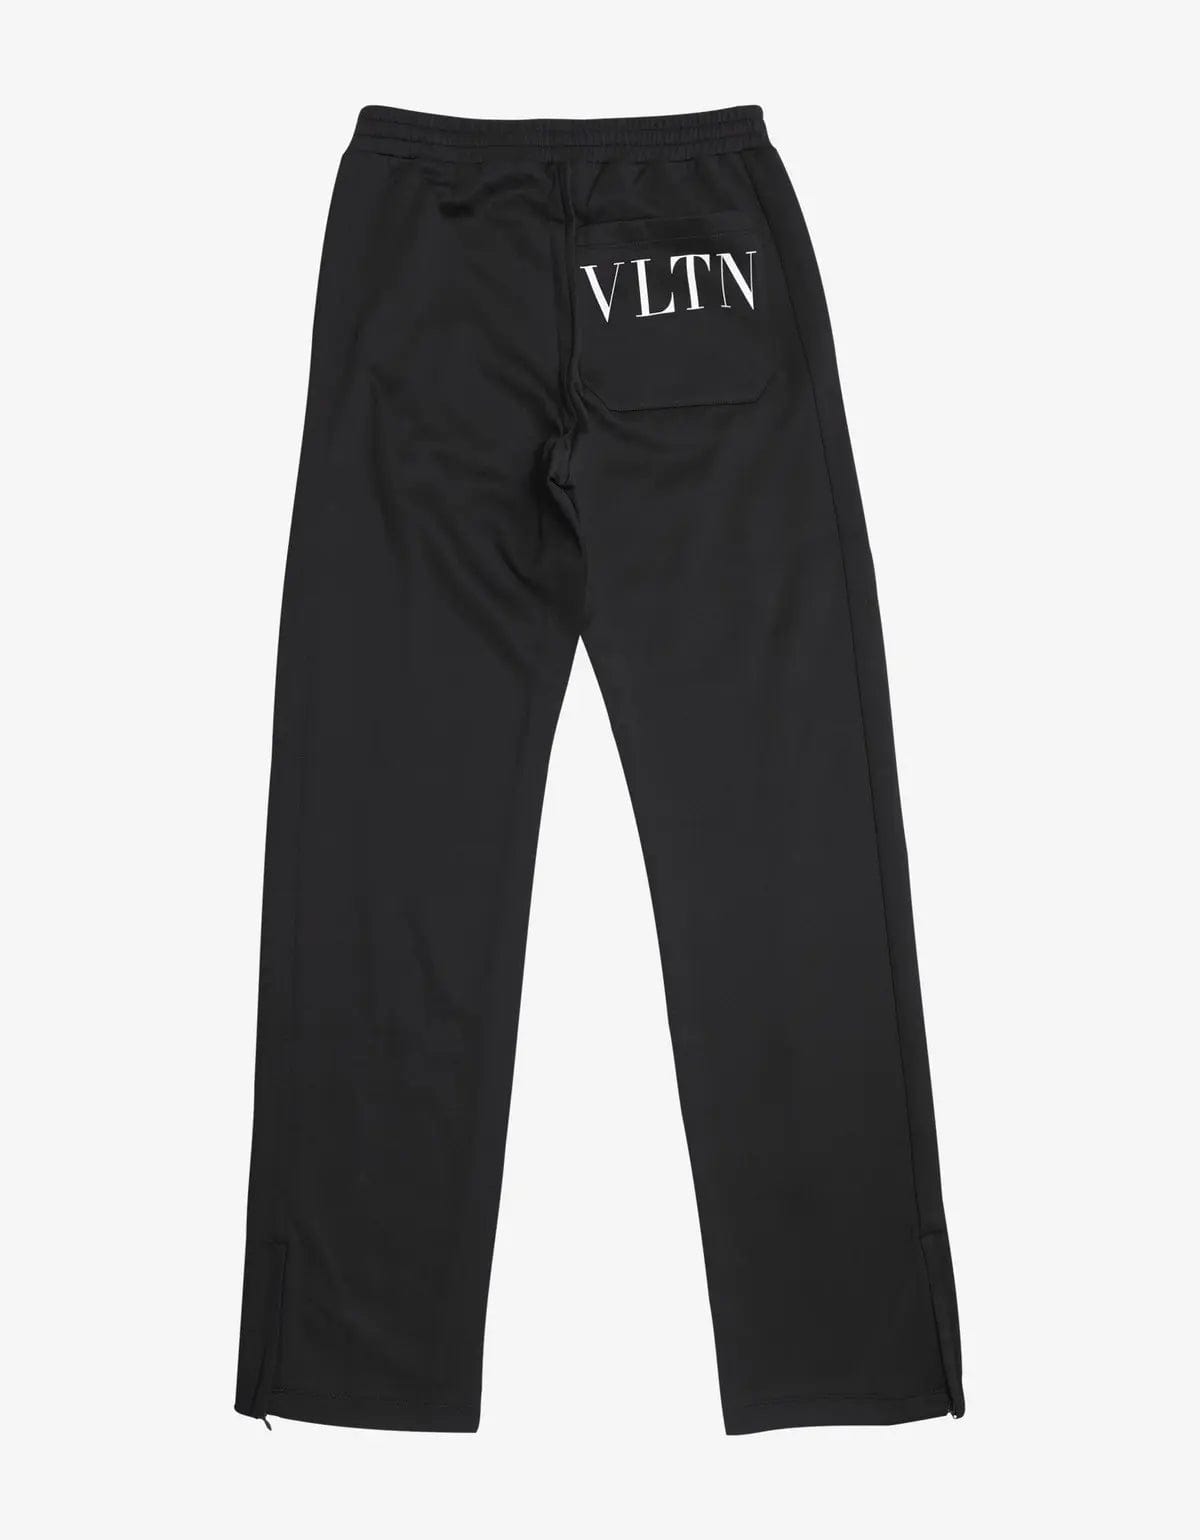 Valentino Garavani Black Nylon Blend VLTN Sweat Pants